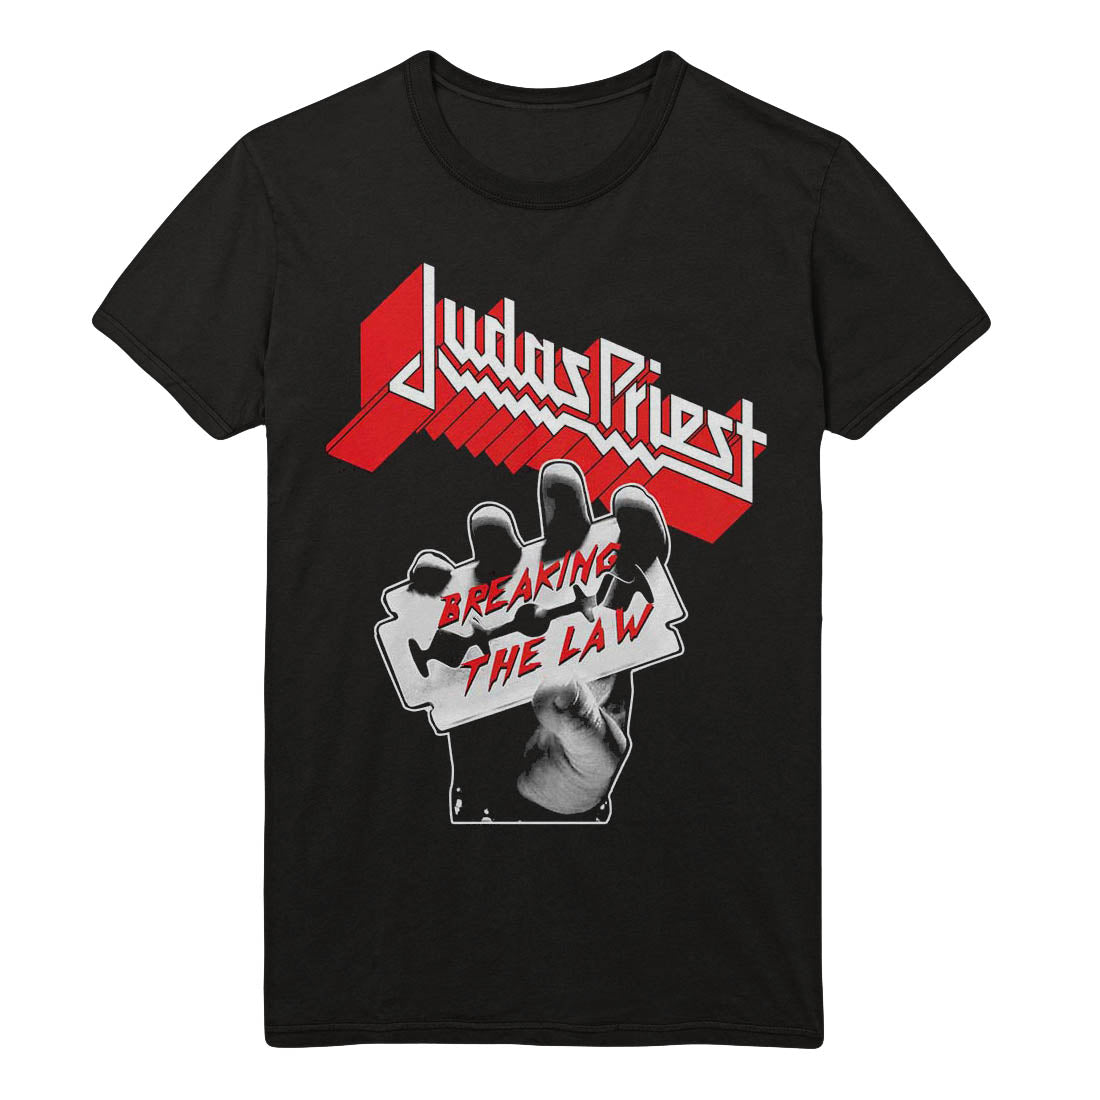 Judas Priest Breaking The Law T-Shirt - GIG-MERCH.com